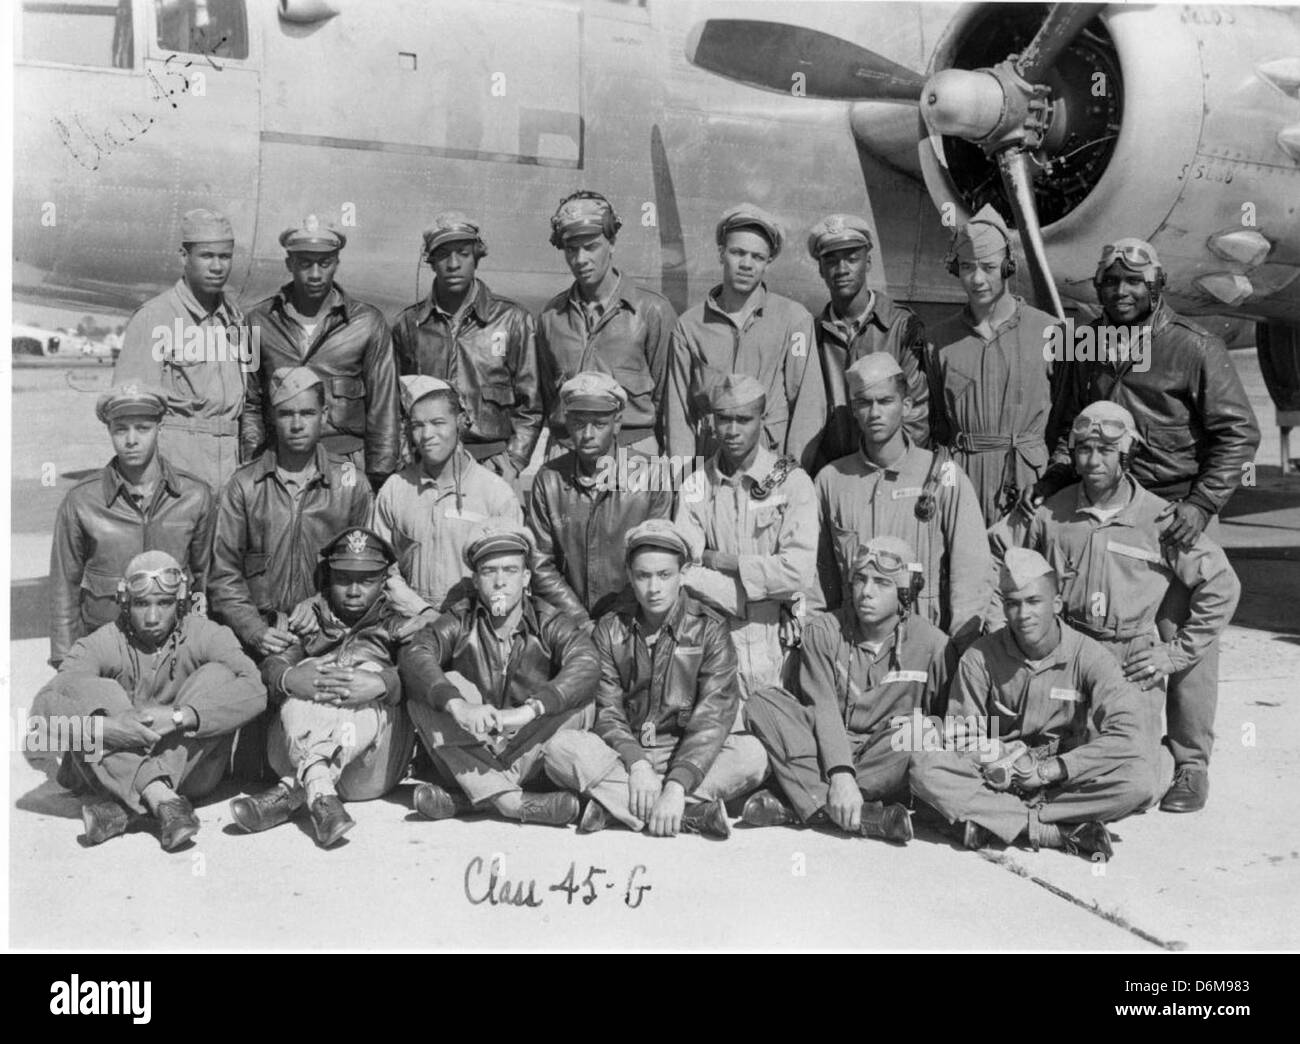 Tuskegee Airmen Class 45-G WW2 African American Pilots 1940s Photo